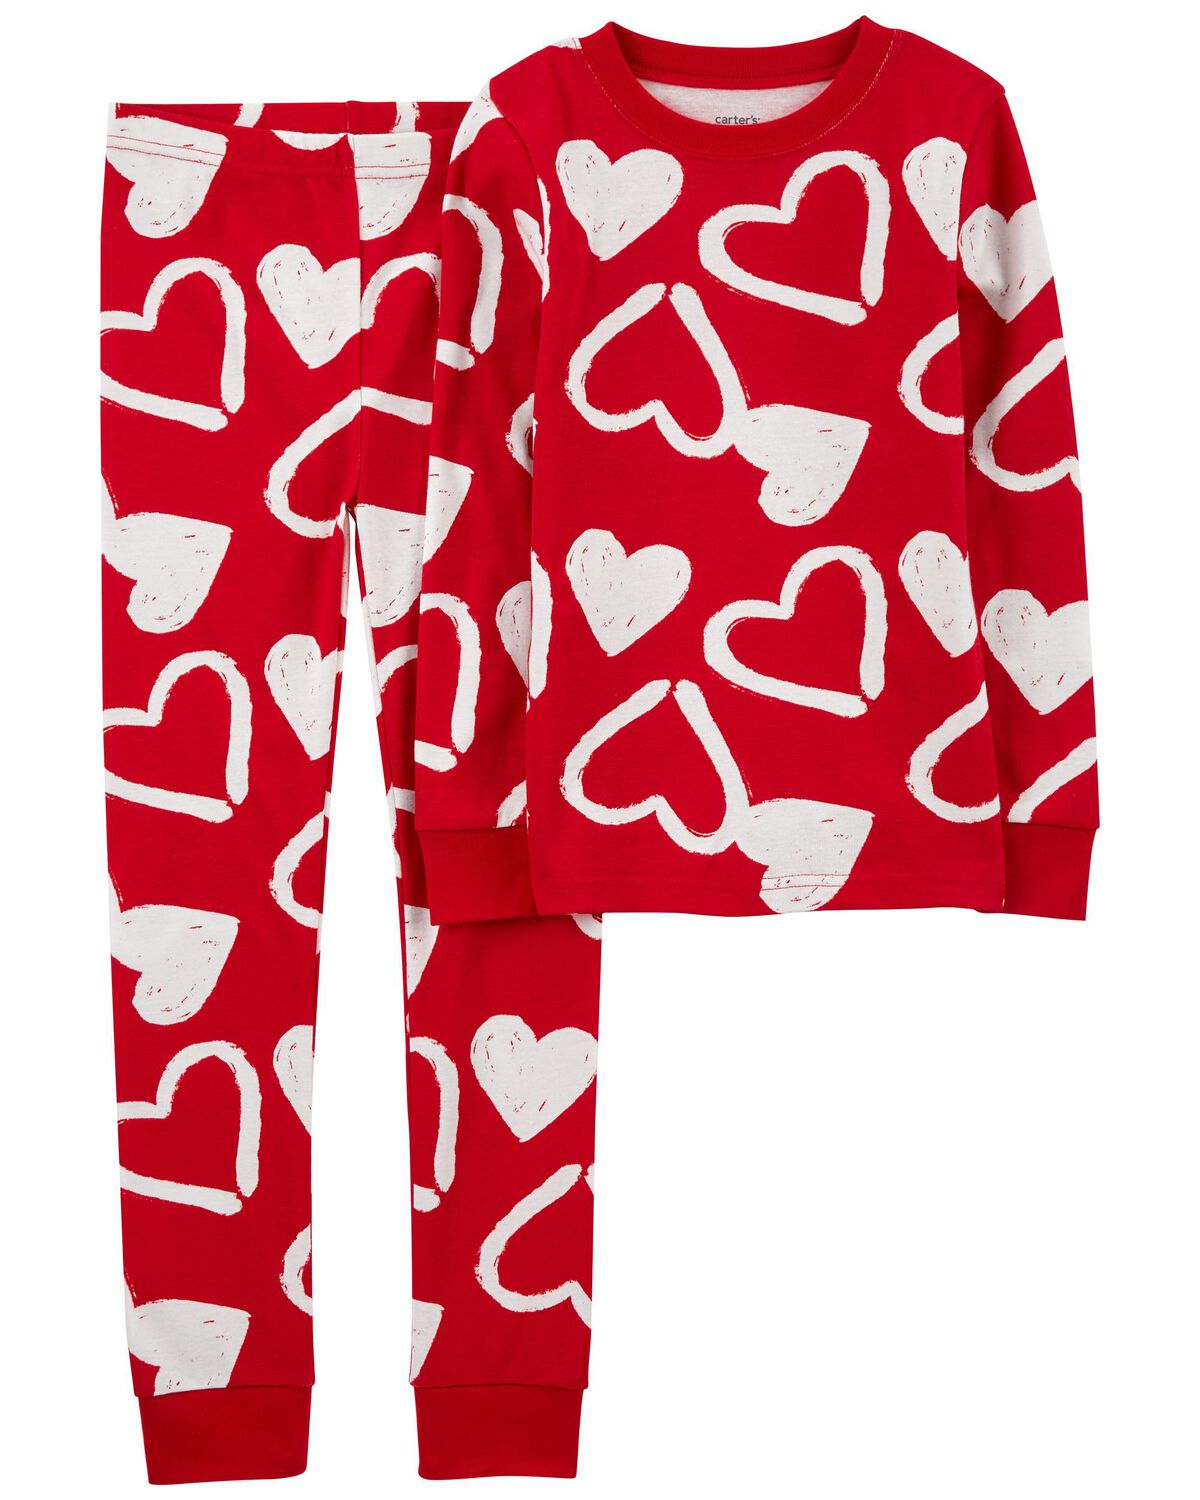 Spider man size M BOYS pajamas NWT 2 pc set red flame resistant marvel  sleepware